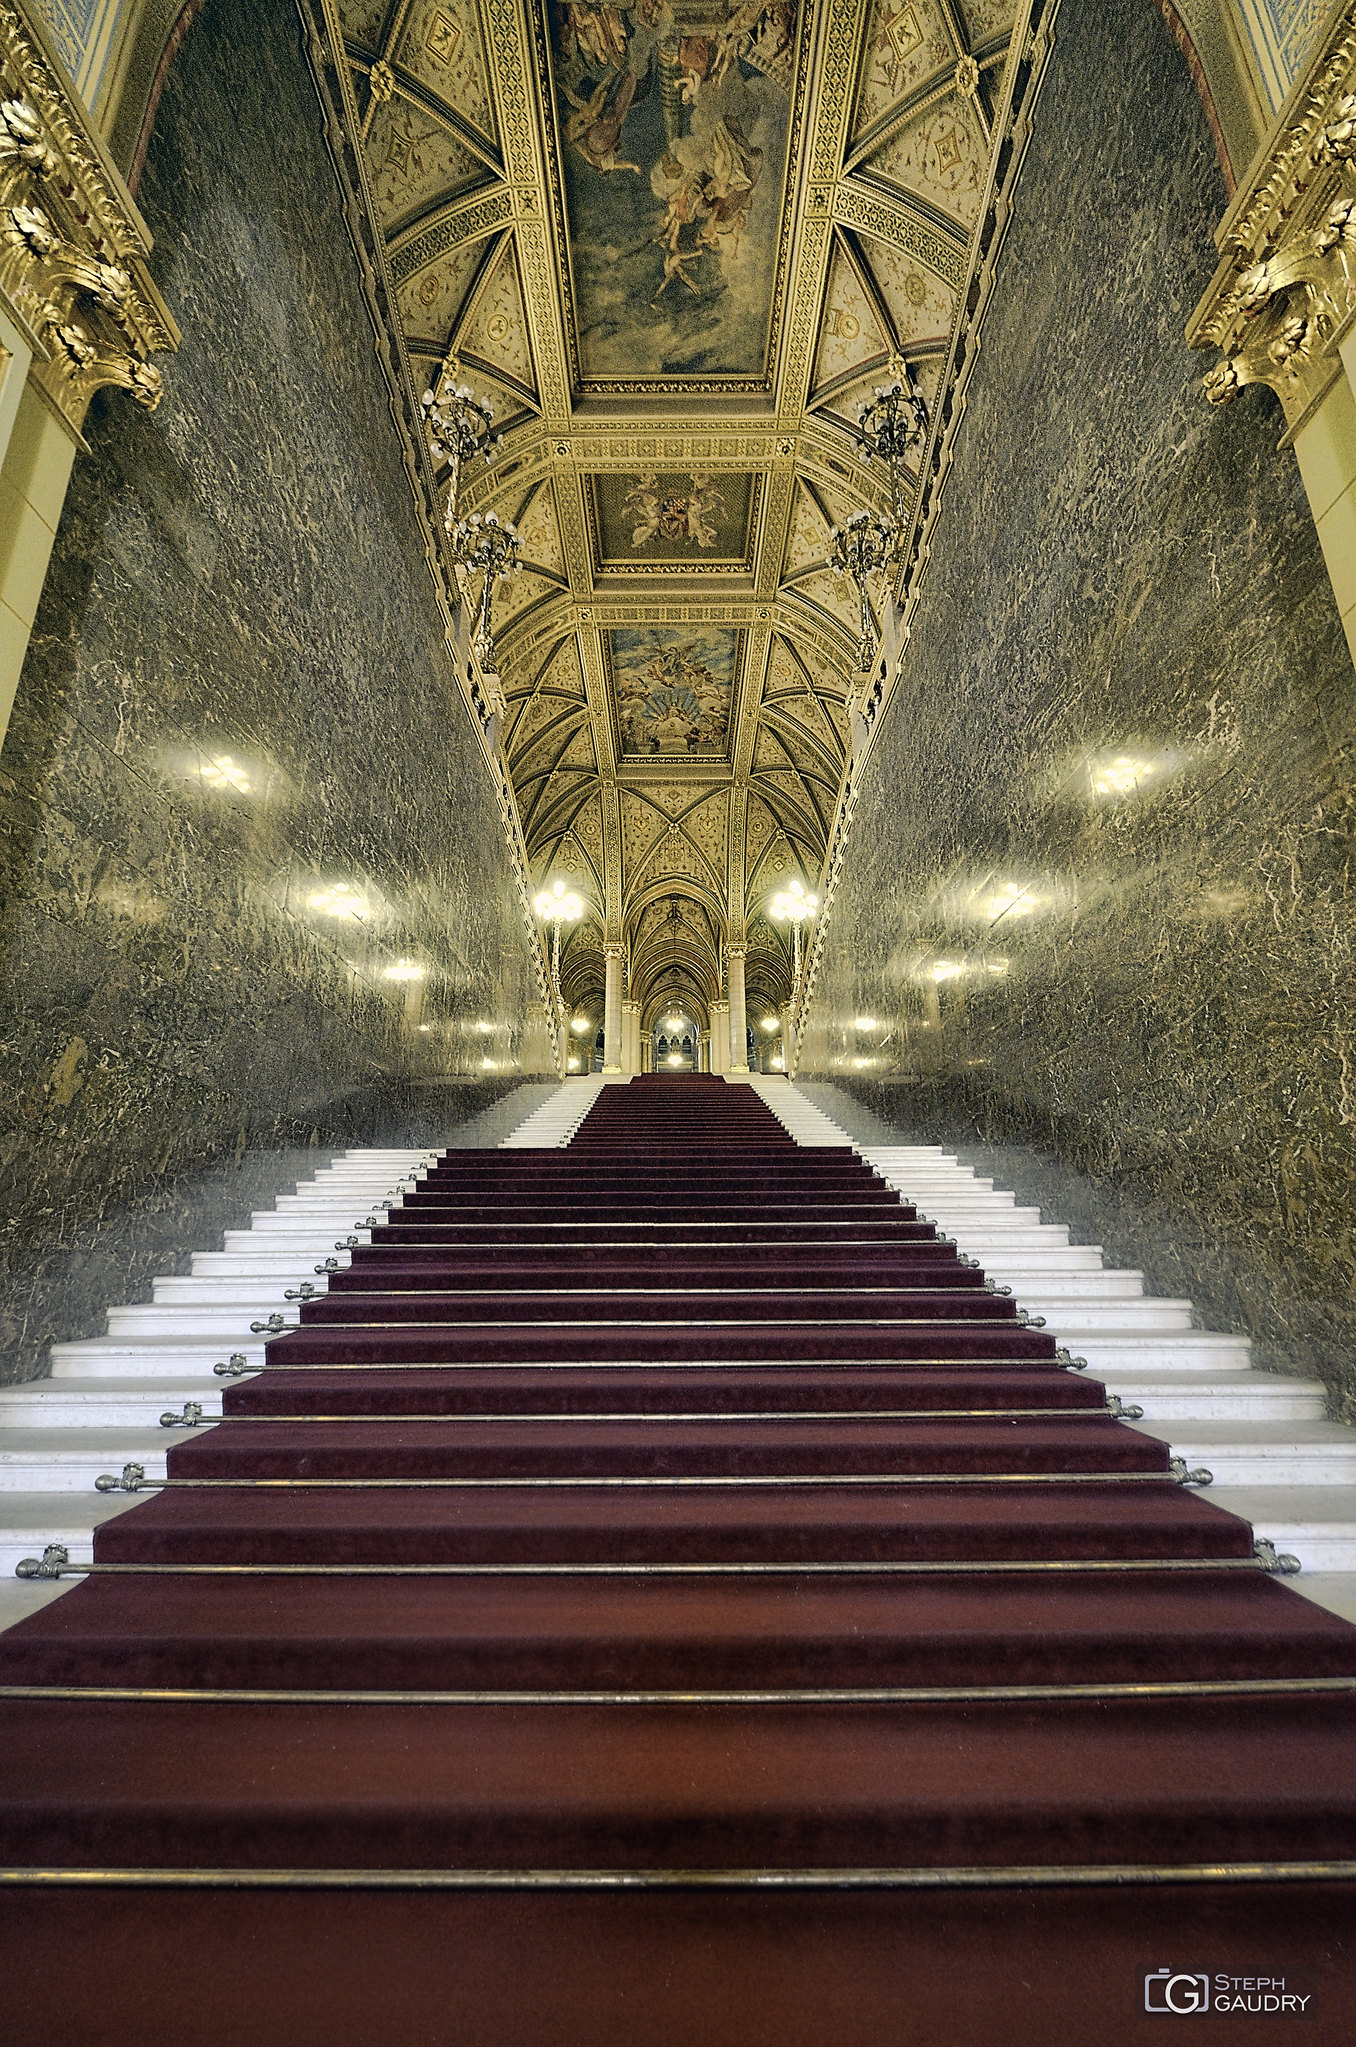 Escaliers du parlement hongrois [Click to start slideshow]